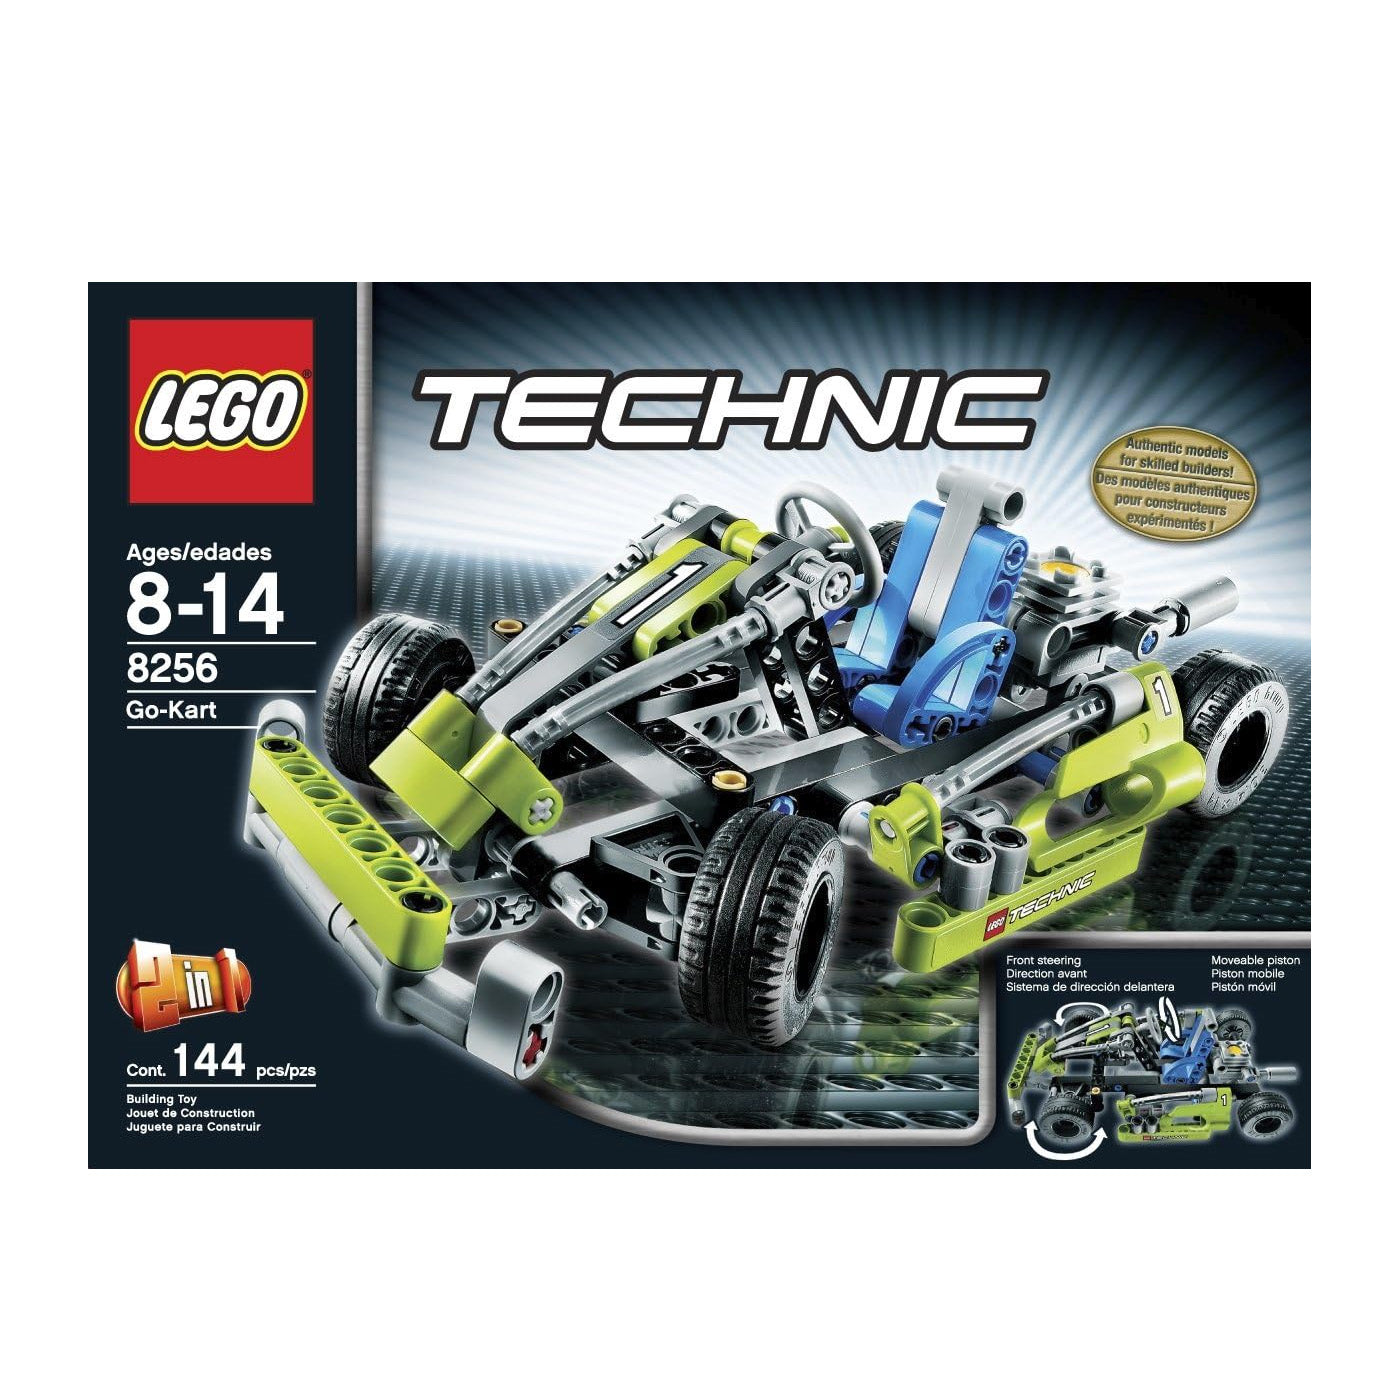 LEGO Technic: Go-Kart Set 8256